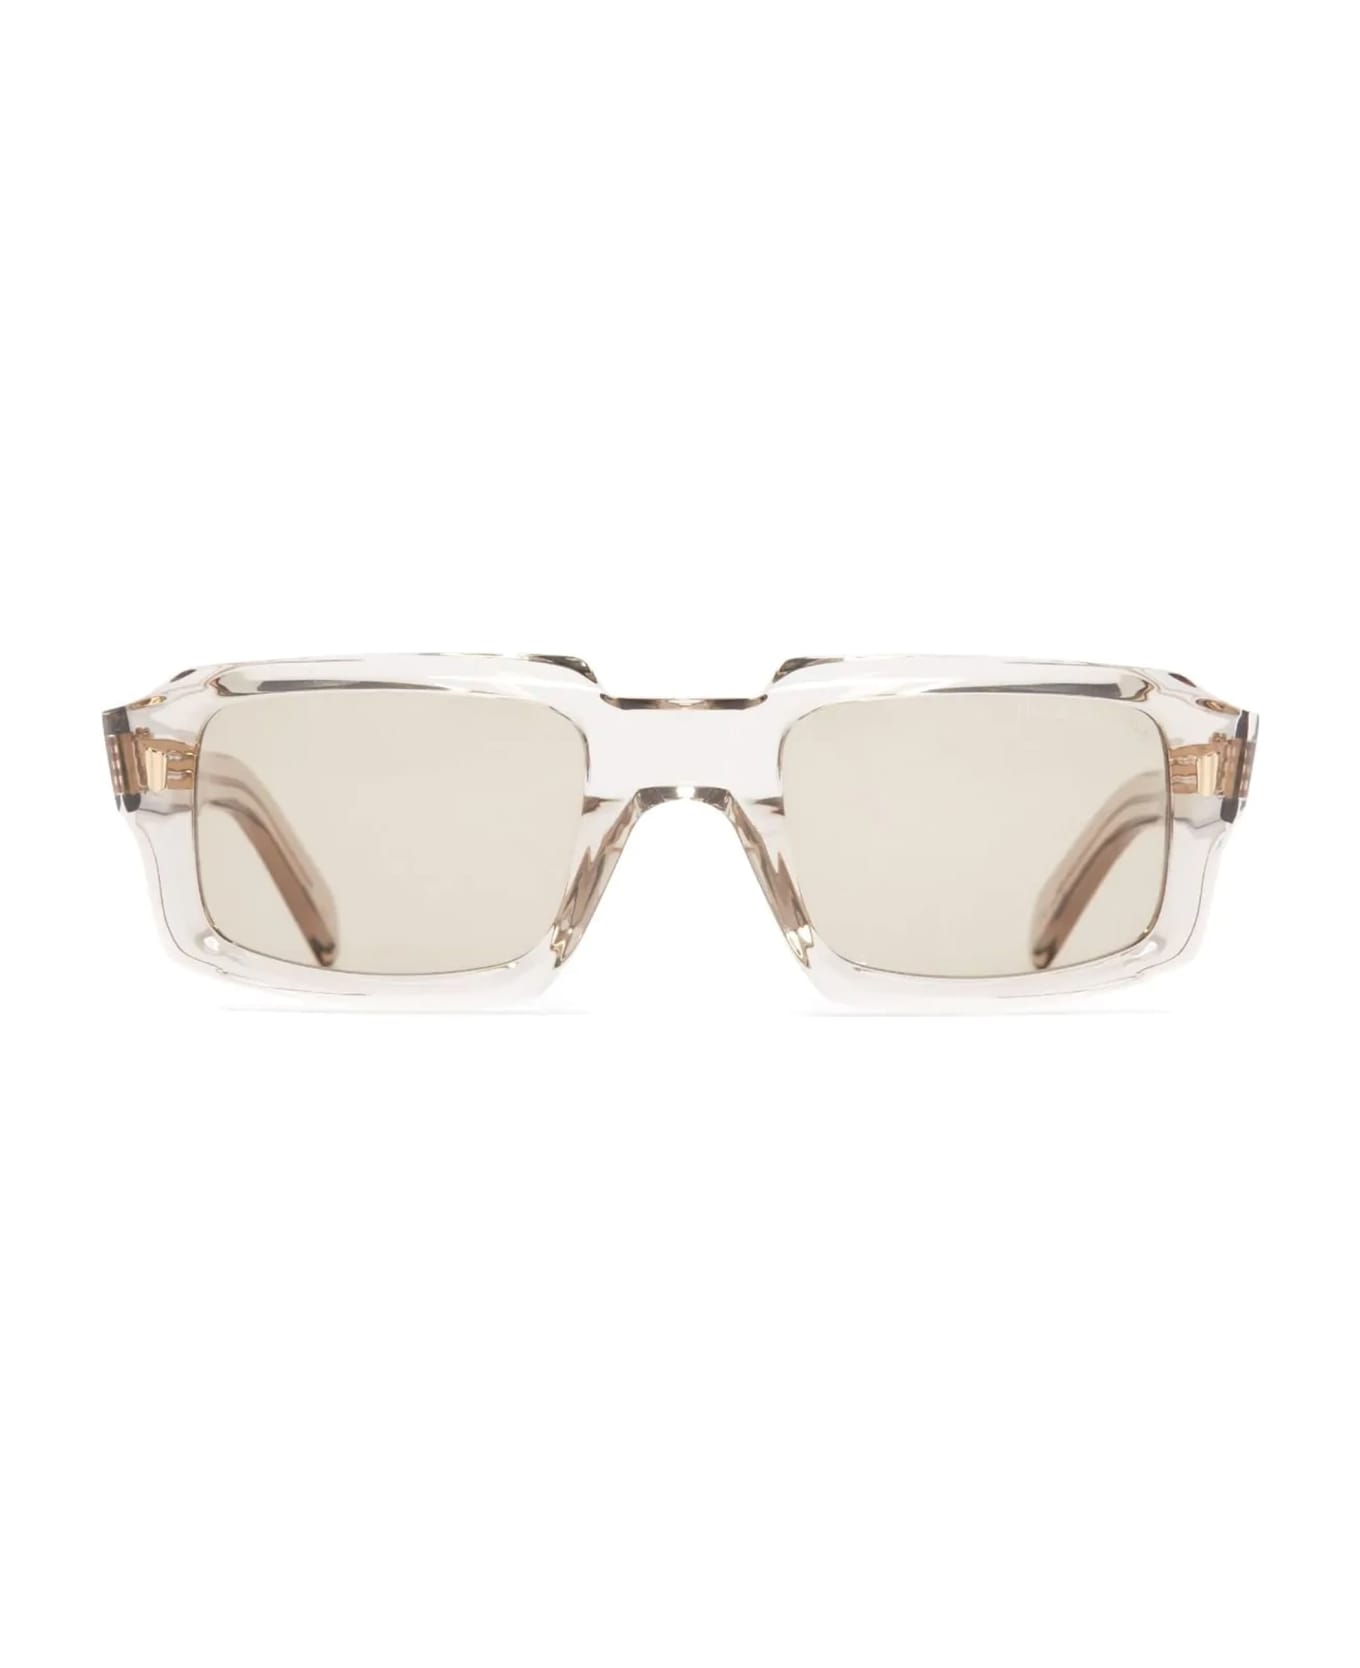 Cutler and Gross 9495 / Sand Crystal Sunglasses - transparent beige